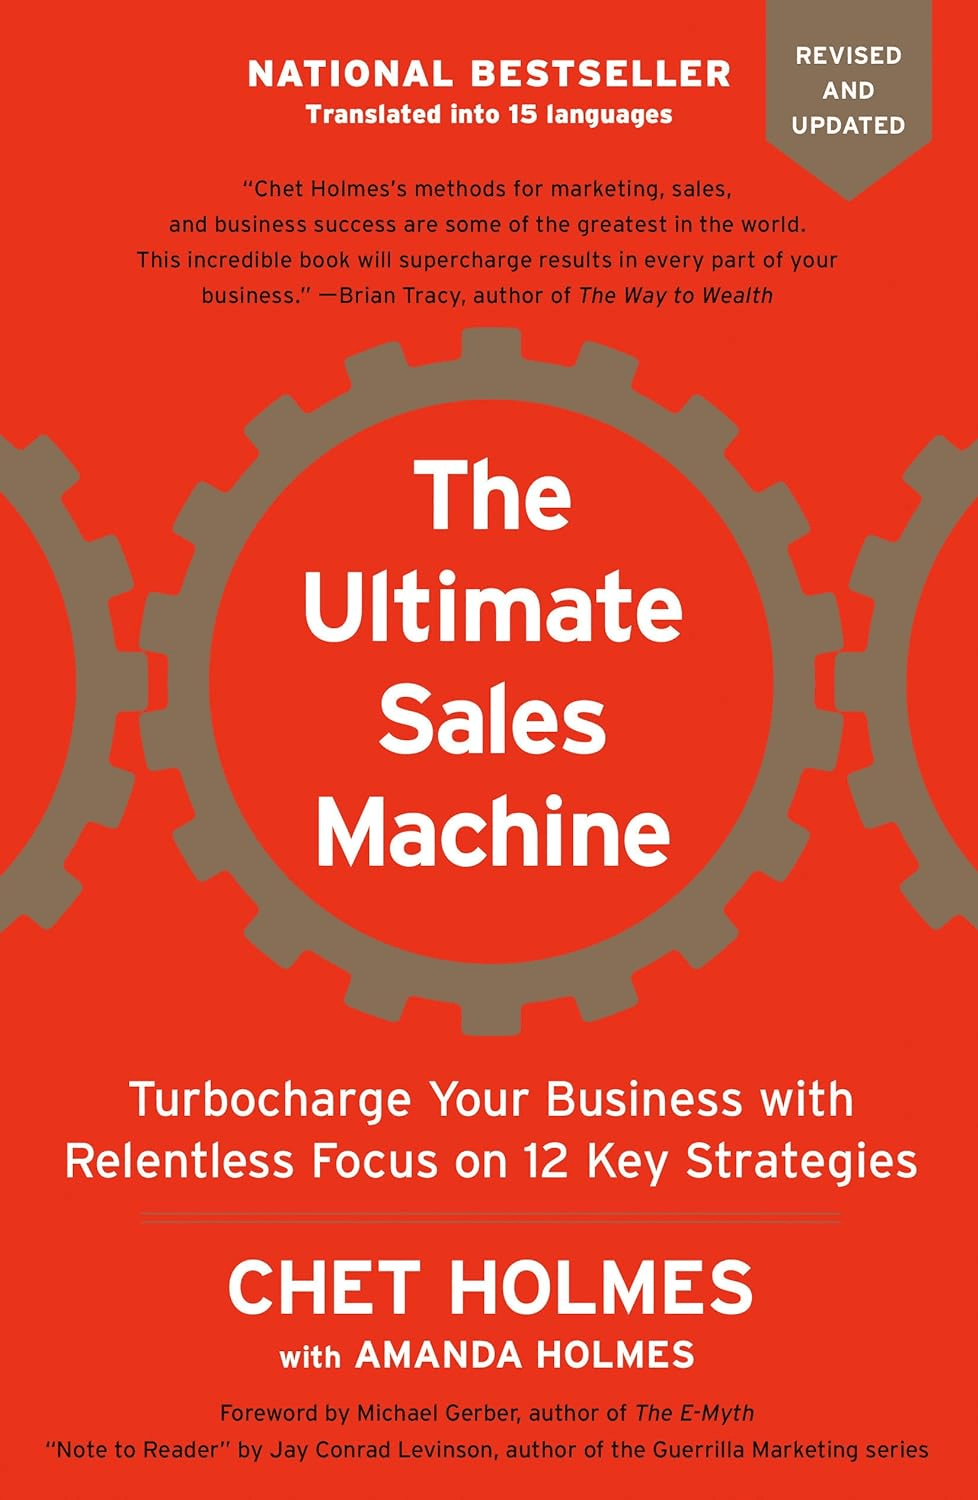 Sales book: The Ultimate Sales Machine